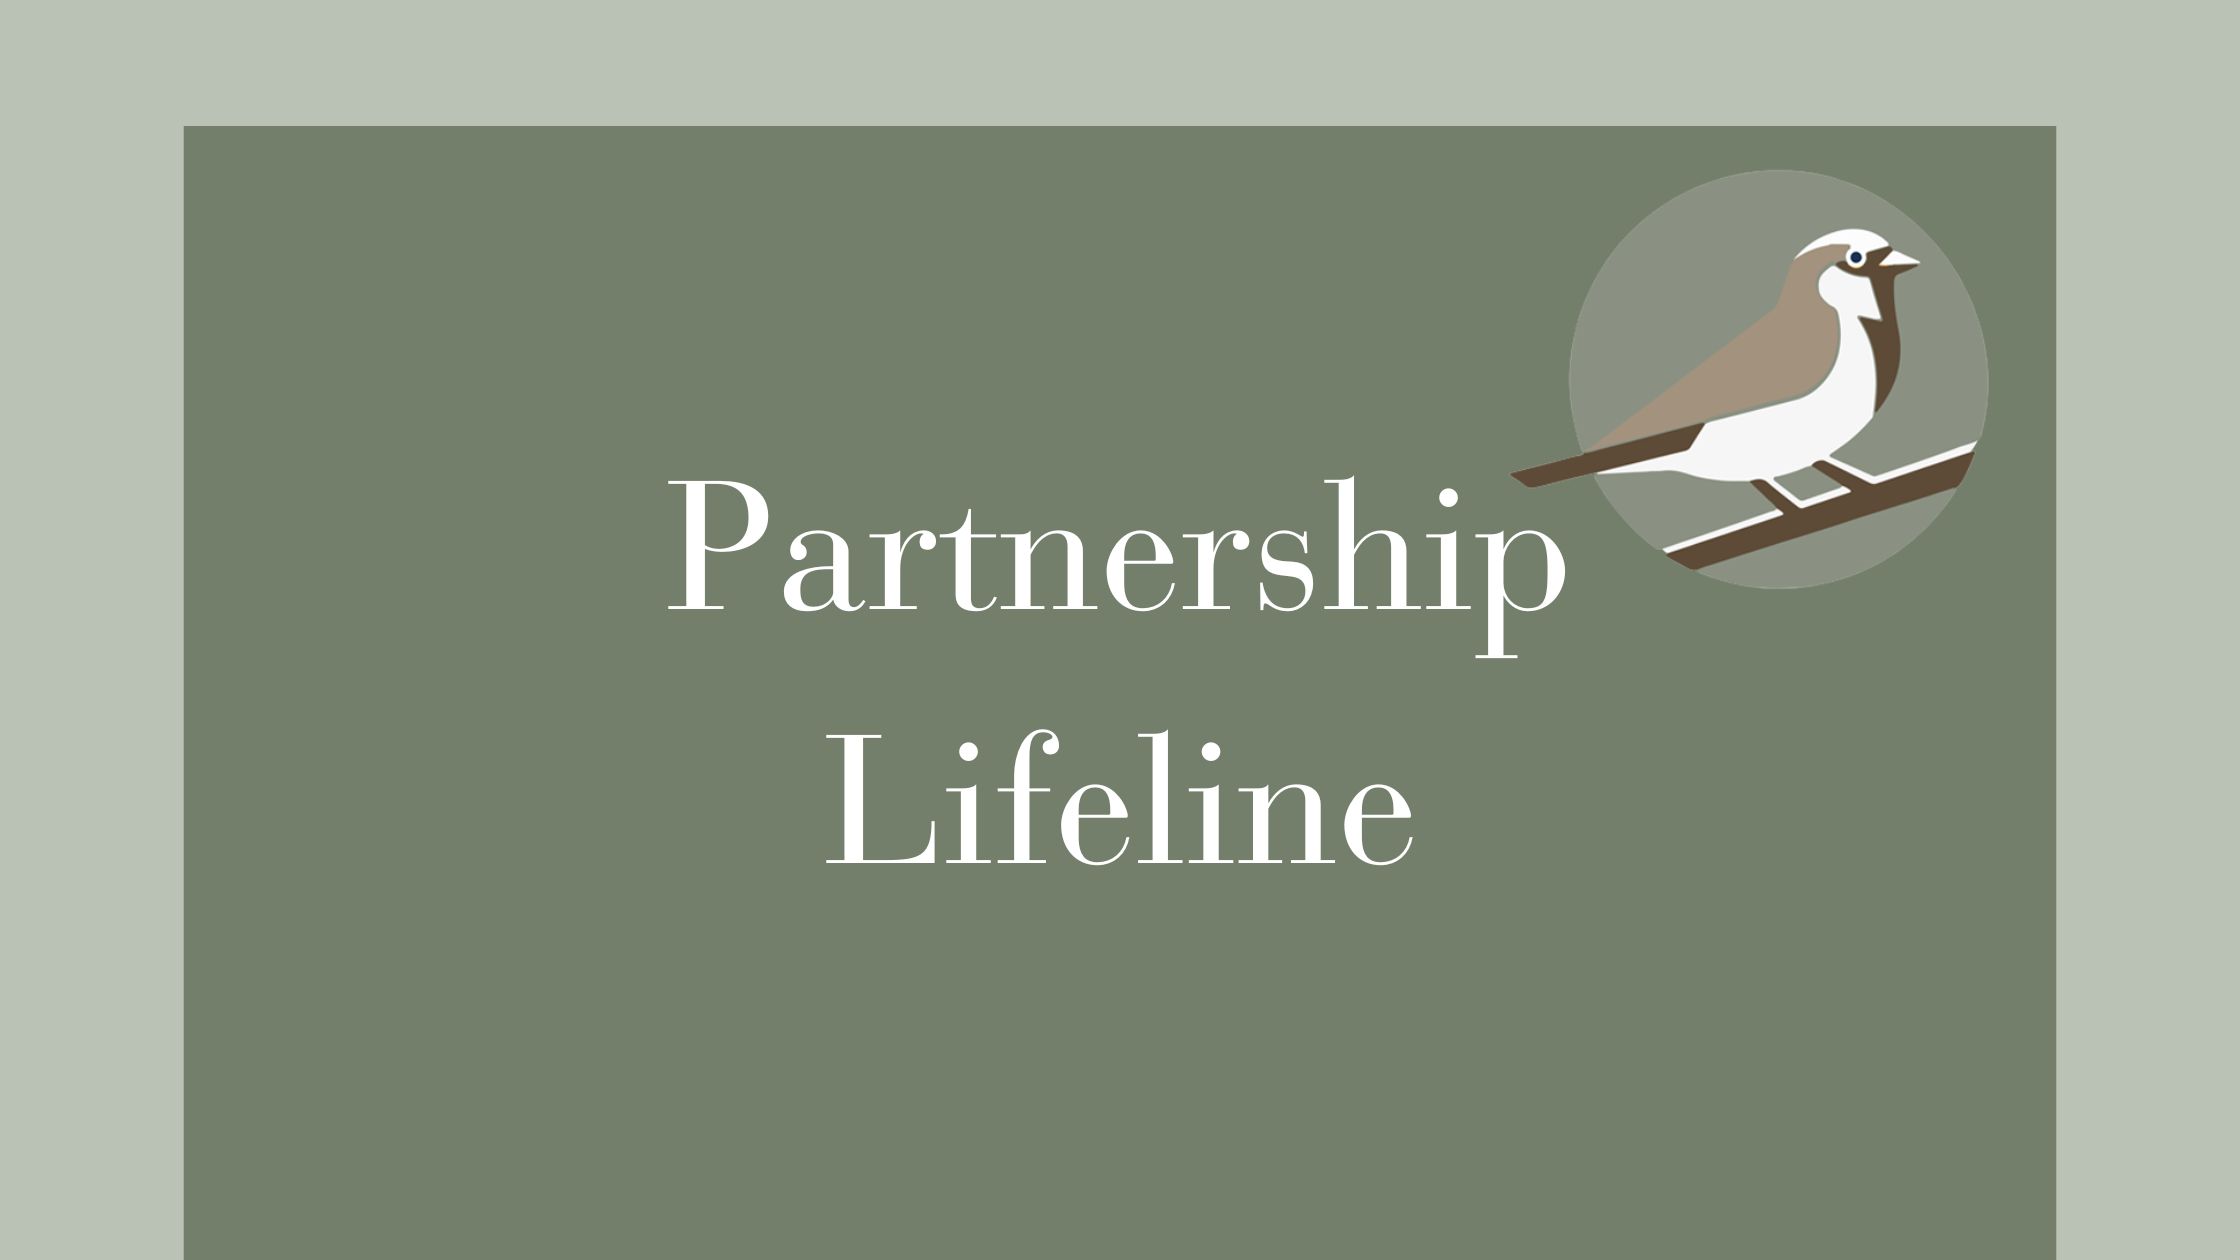 Partnership Lifeline